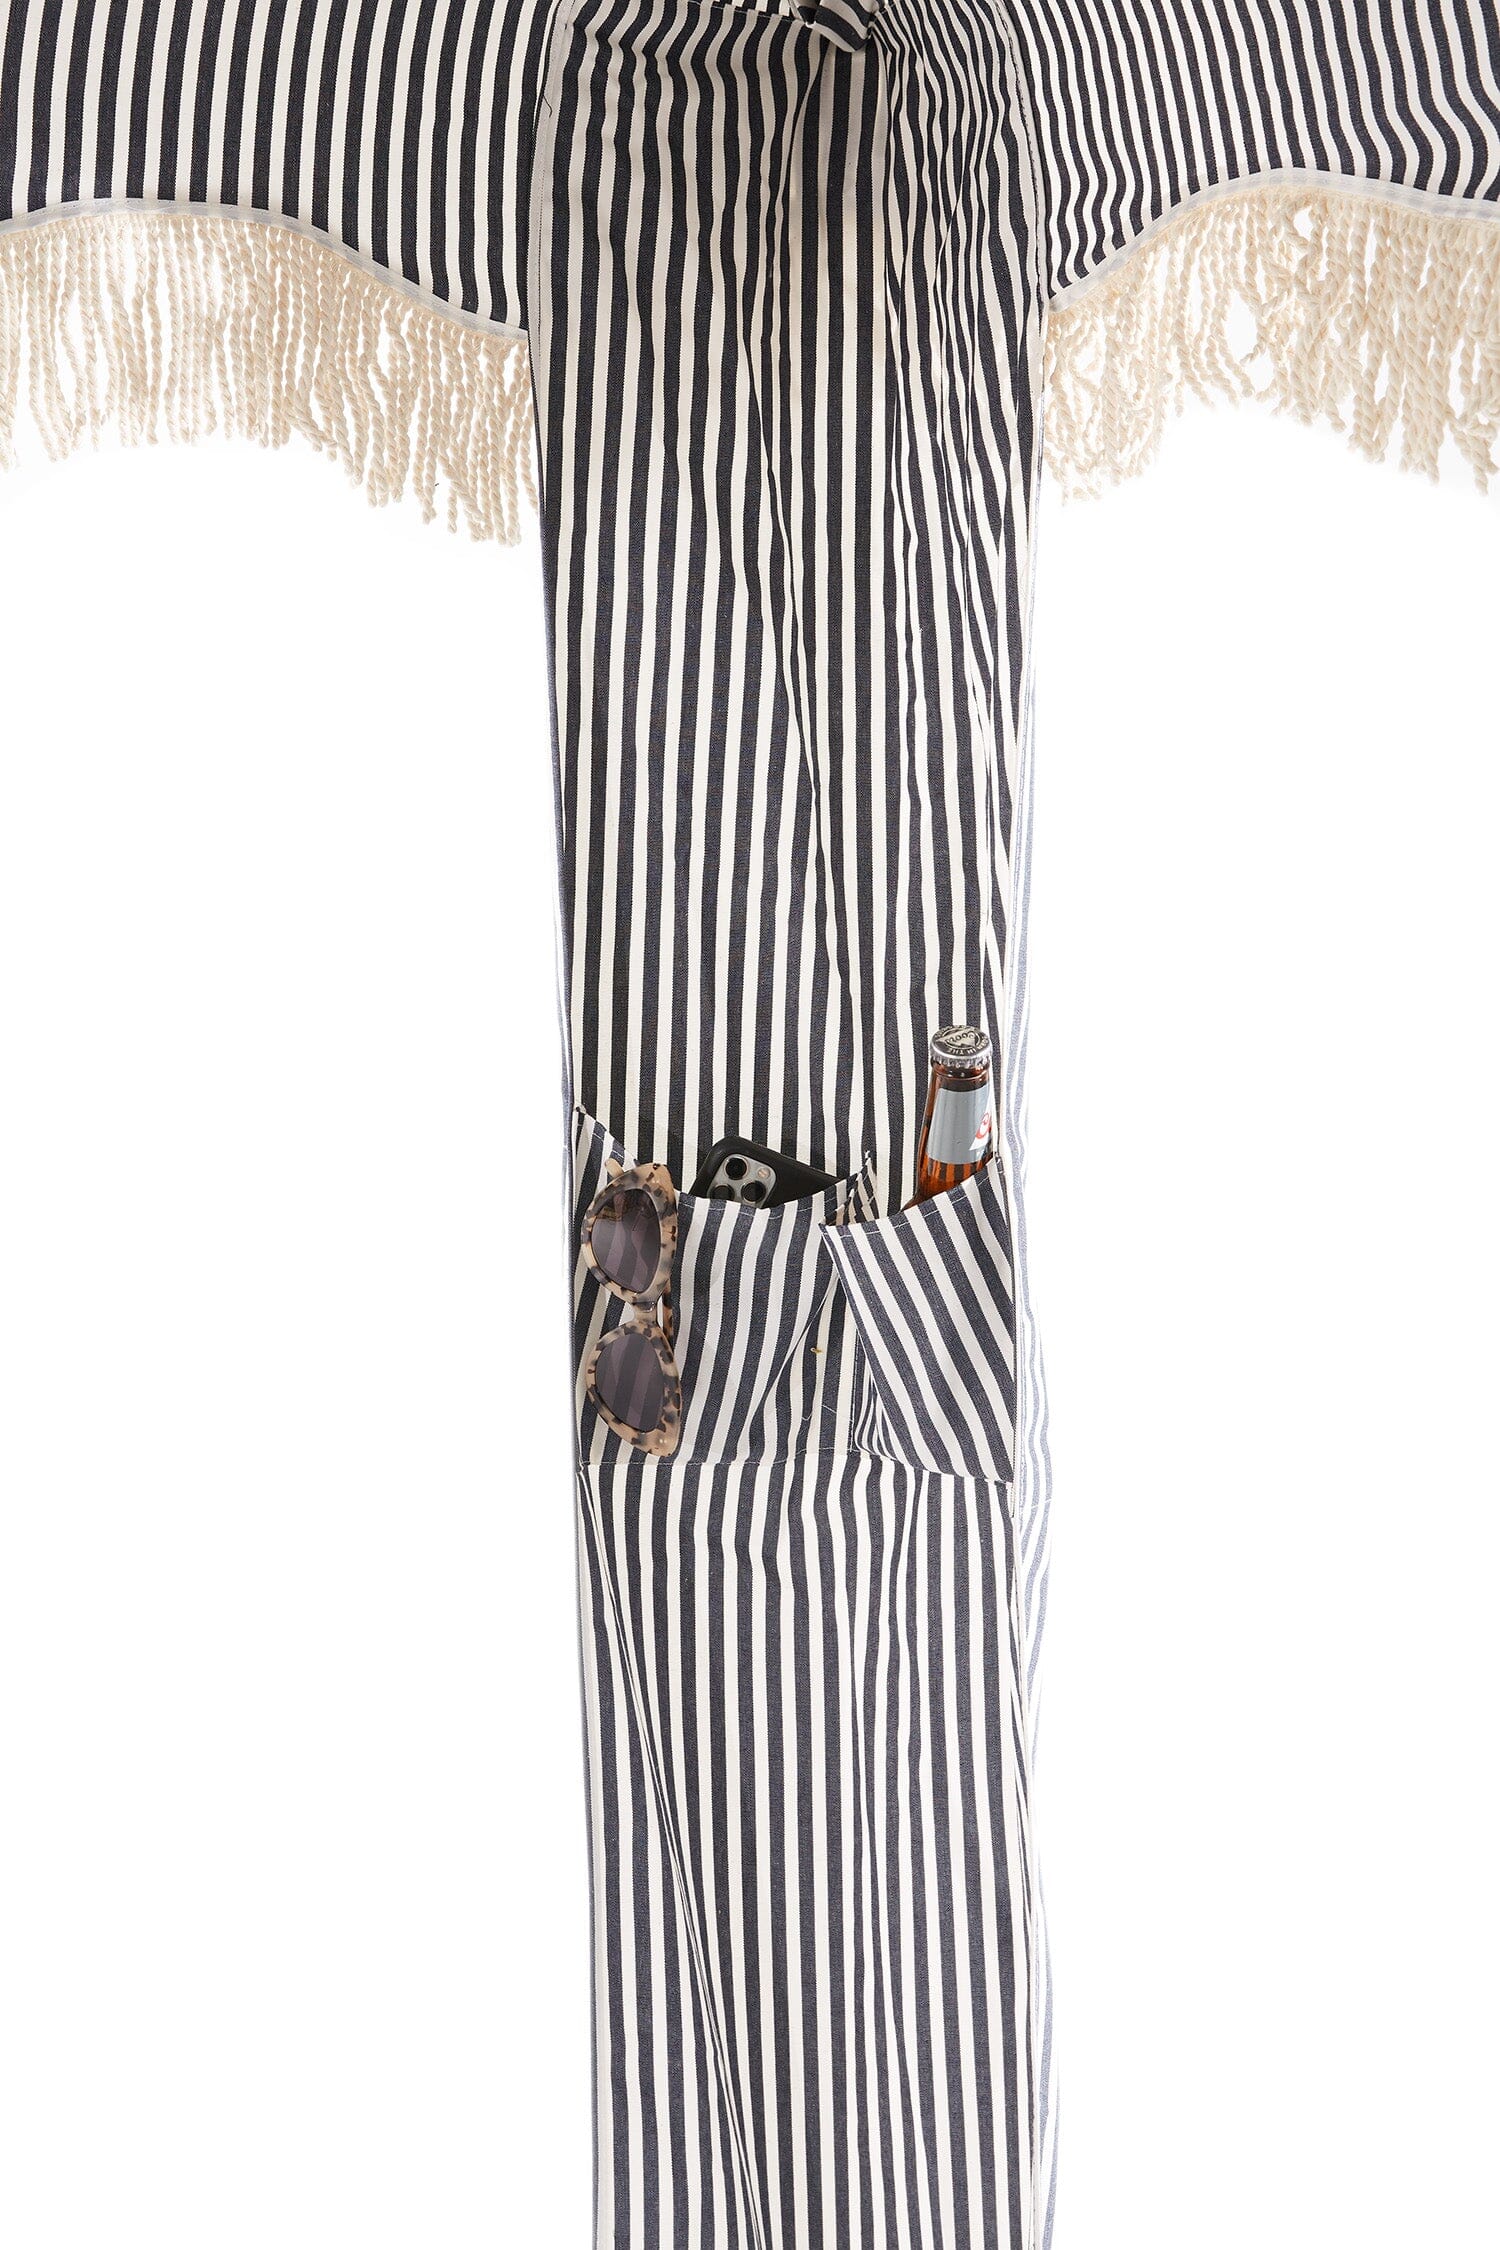 The Premium Cabana - Lauren's Navy Stripe